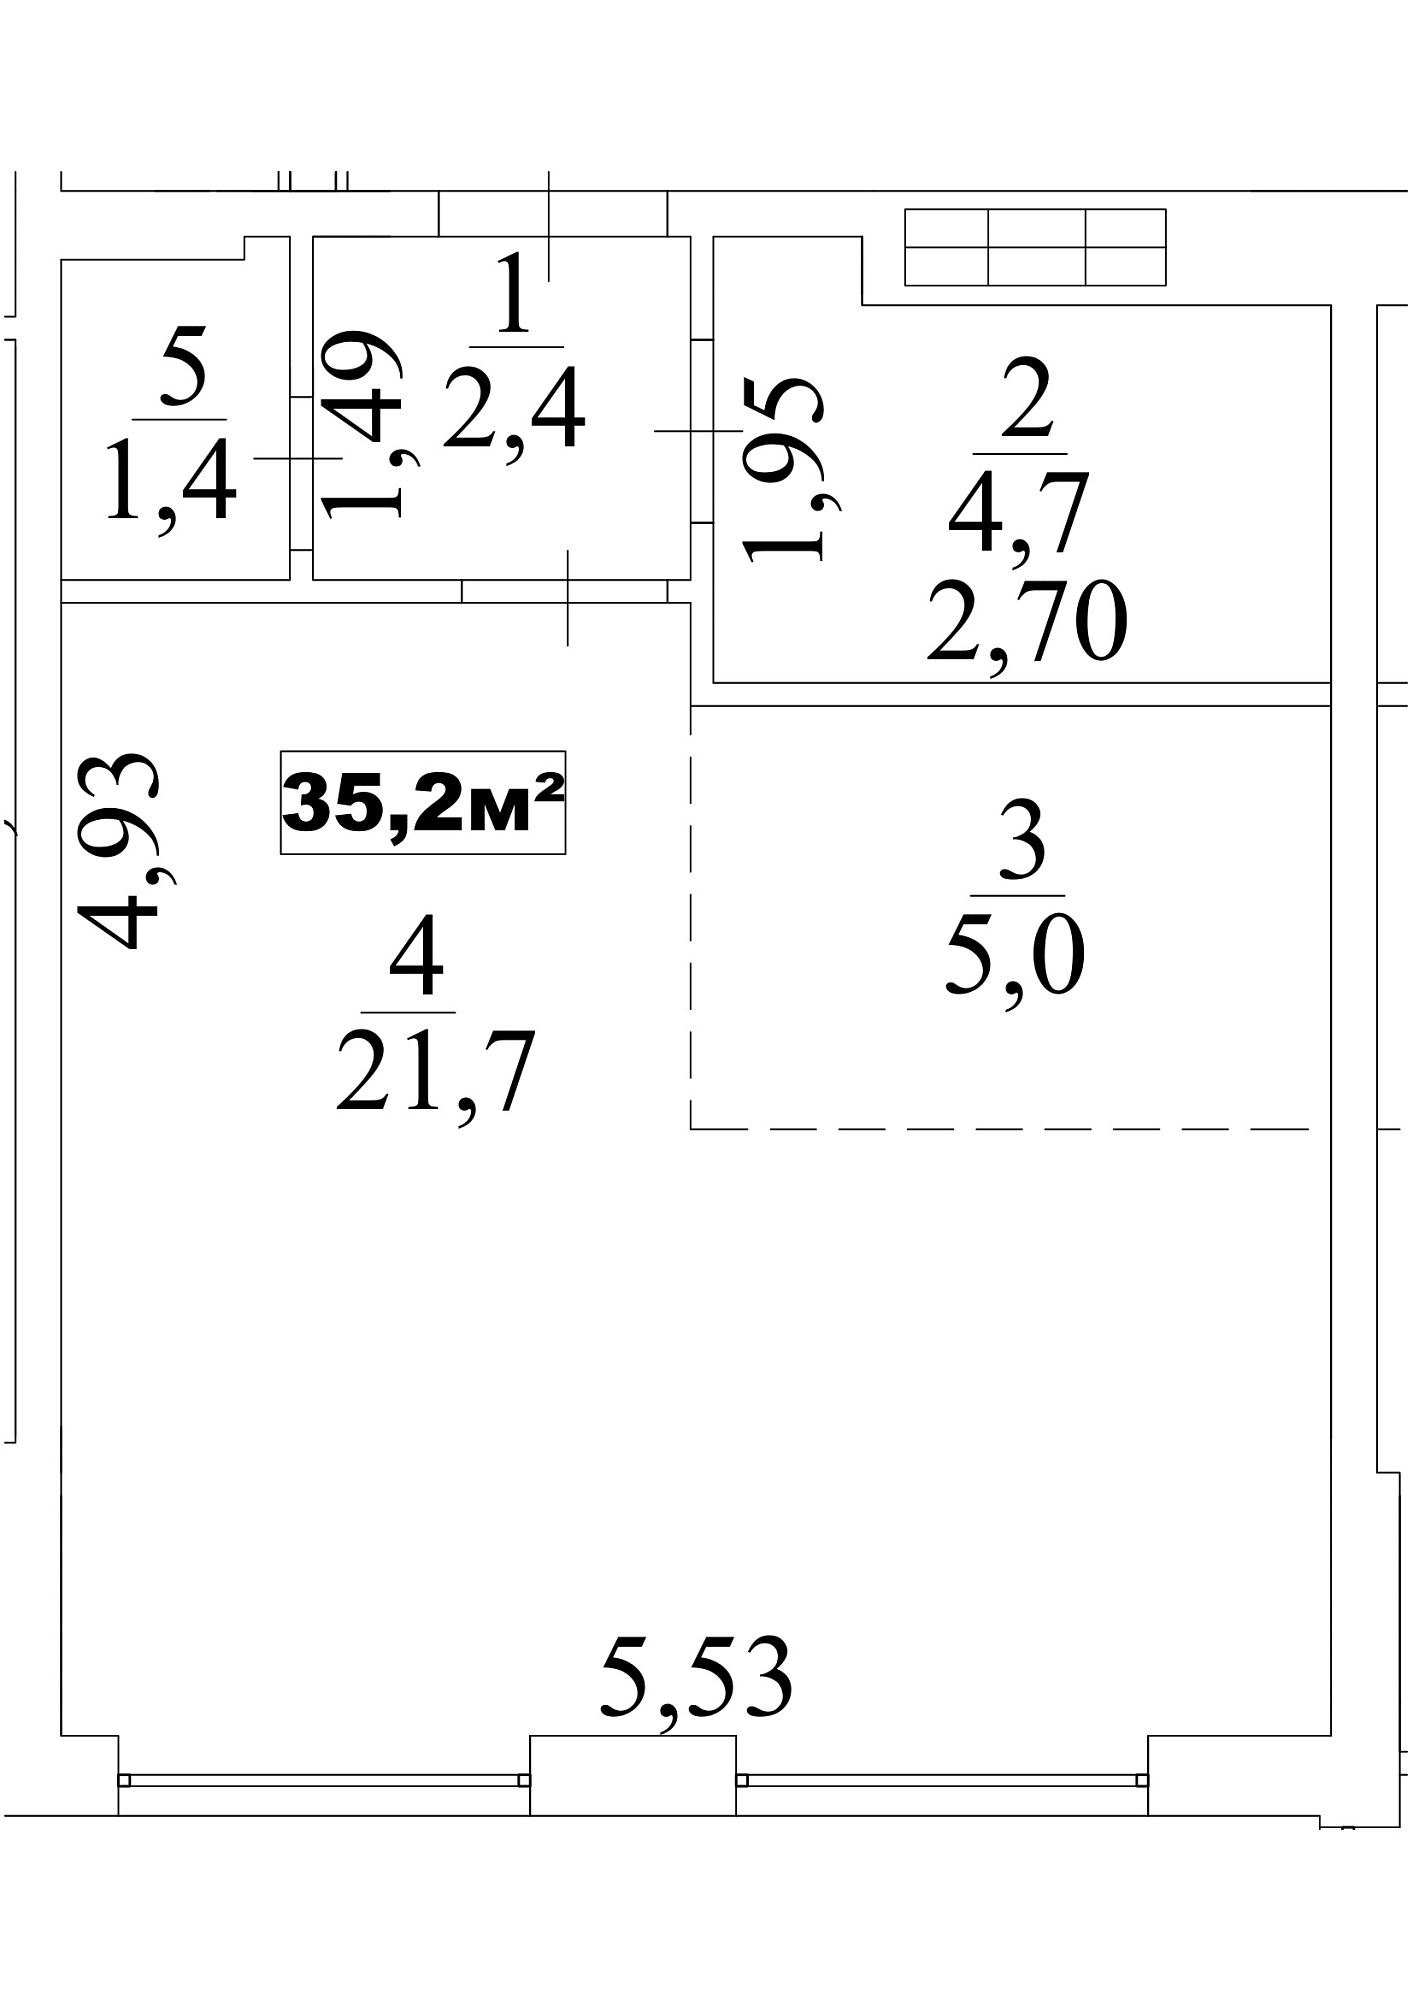 Planning Smart flats area 35.2m2, AB-10-02/00011.